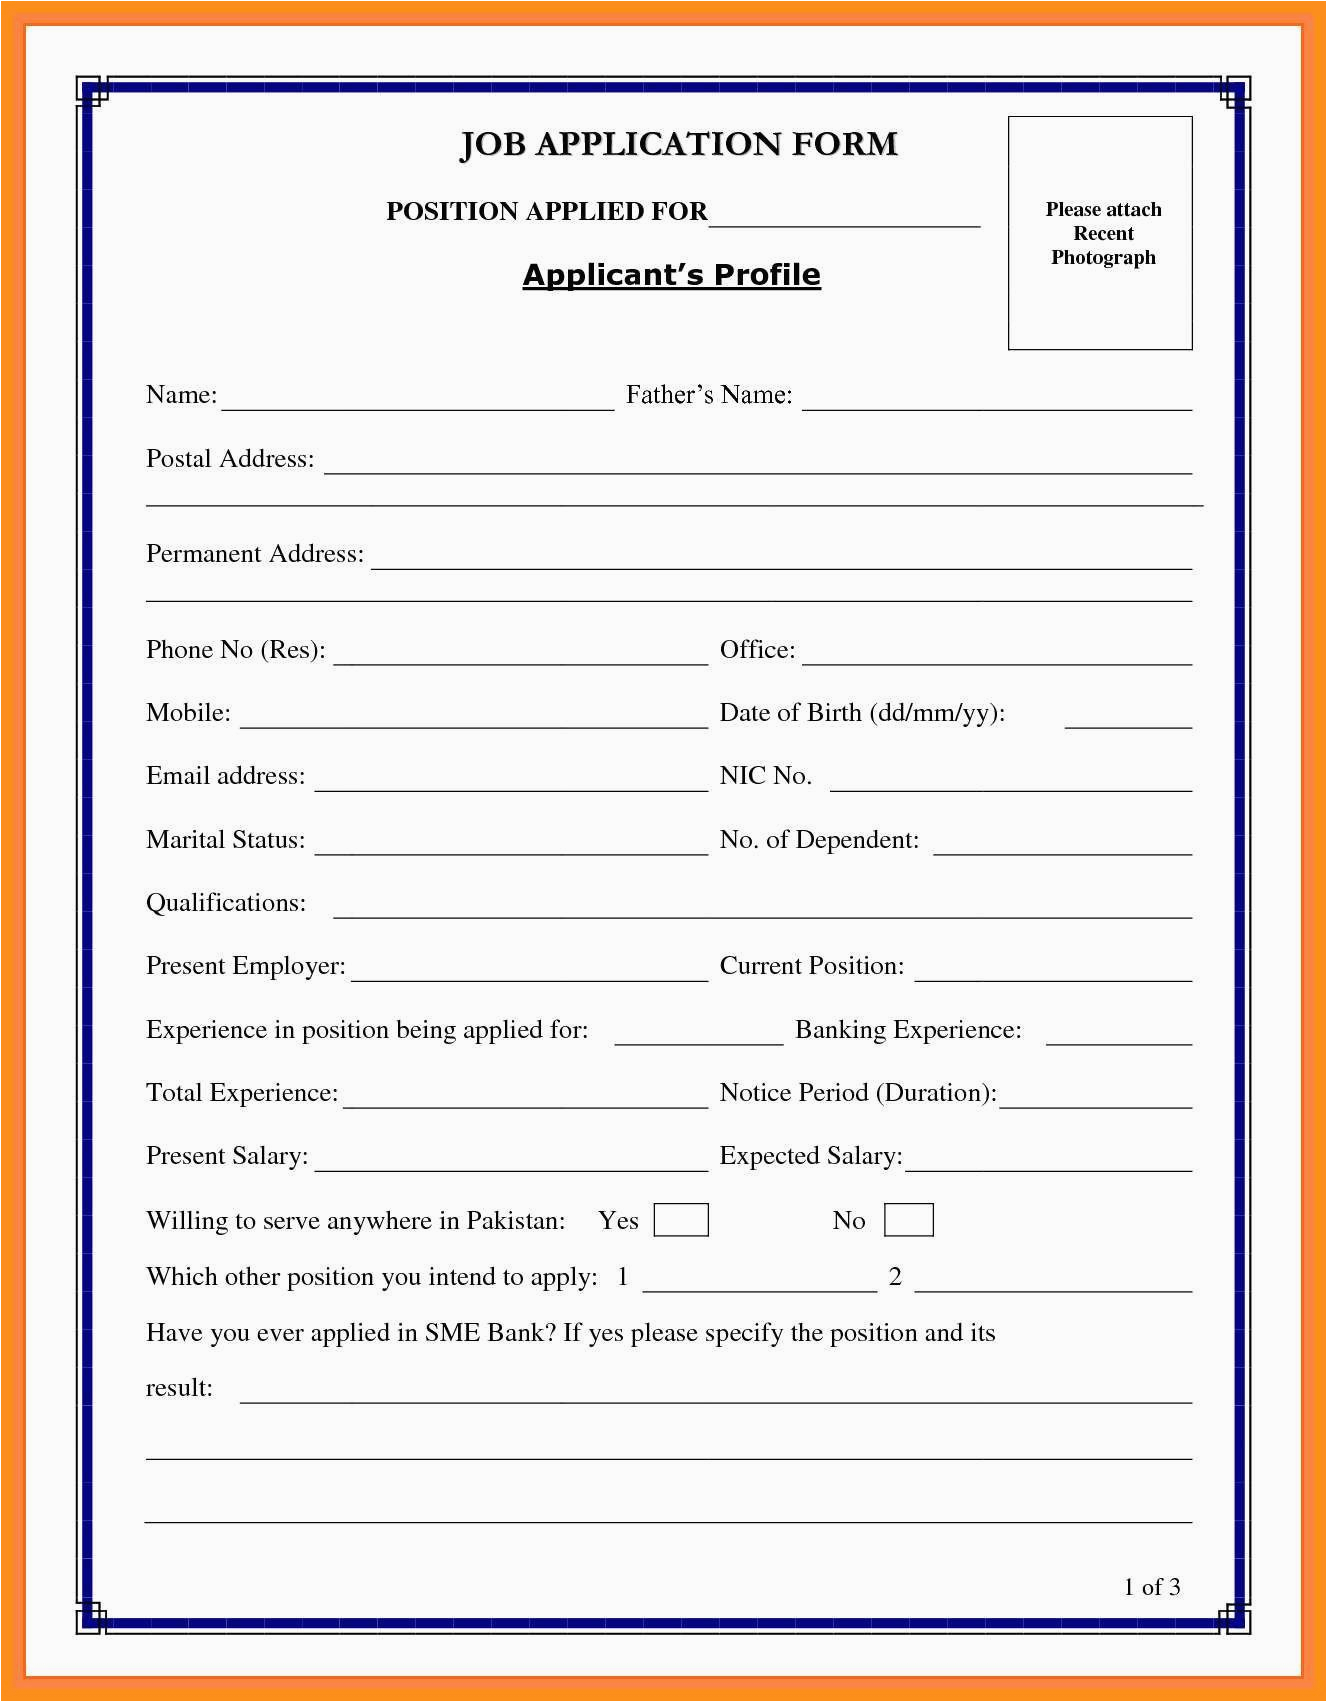 Resume for Job Application Sample Pdf Job Application Blank Resume format Pdf Free Download